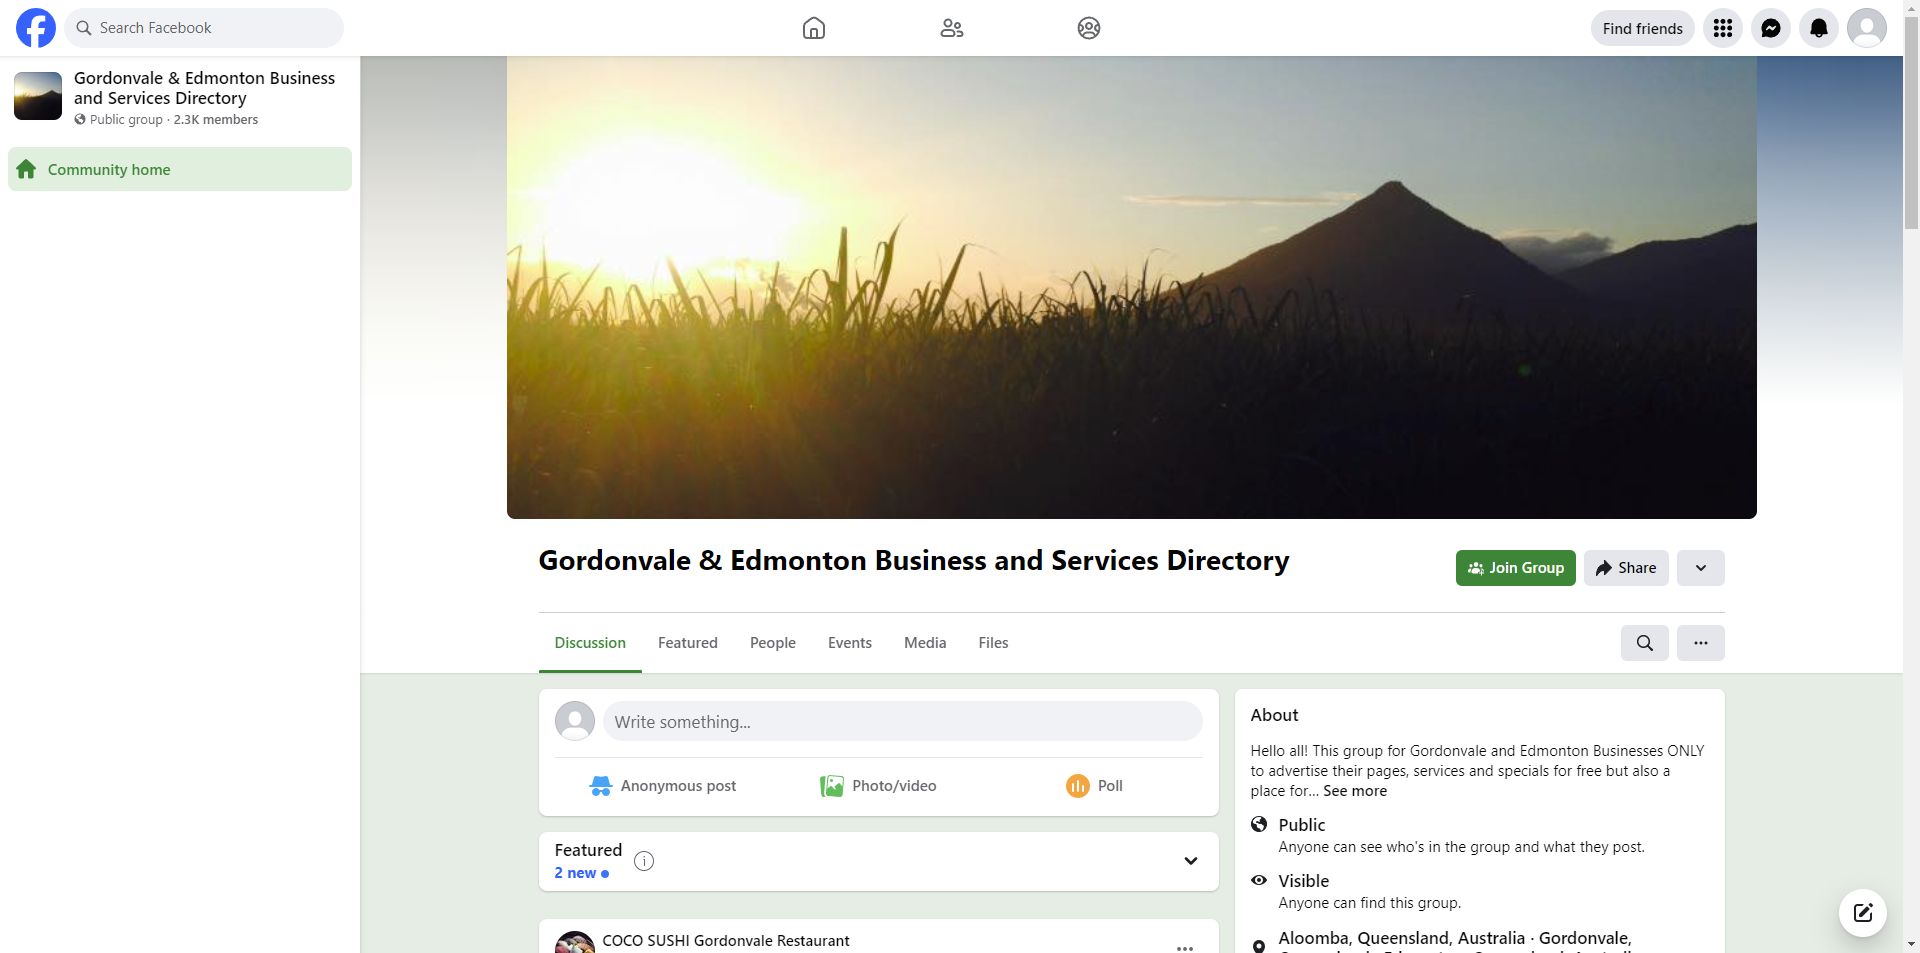 Gordonvale & Edmonton Business and Services Directory